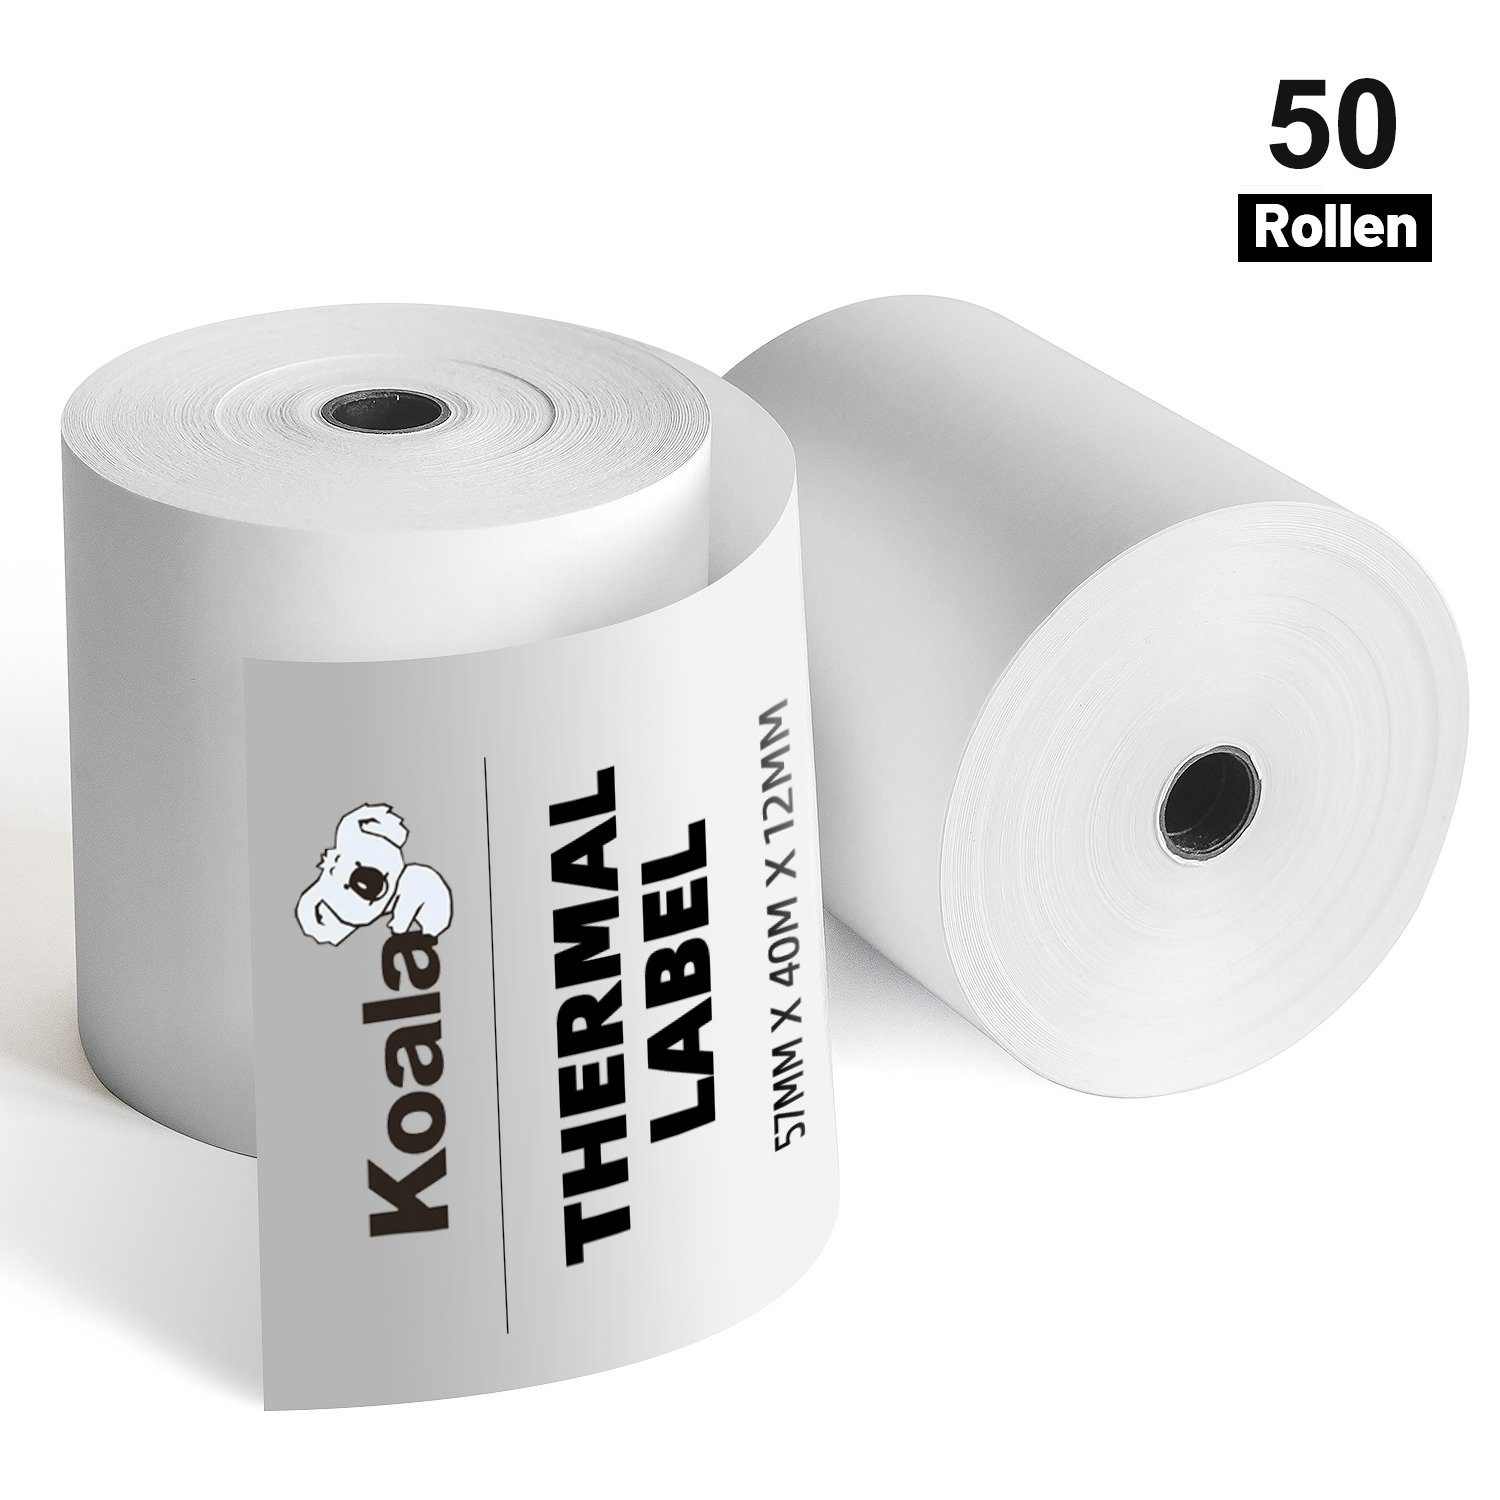 Koala Etikettenpapier 50 Rollen 57 x 40 mm Thermopapier Bonrolle für Kassen, Drucker